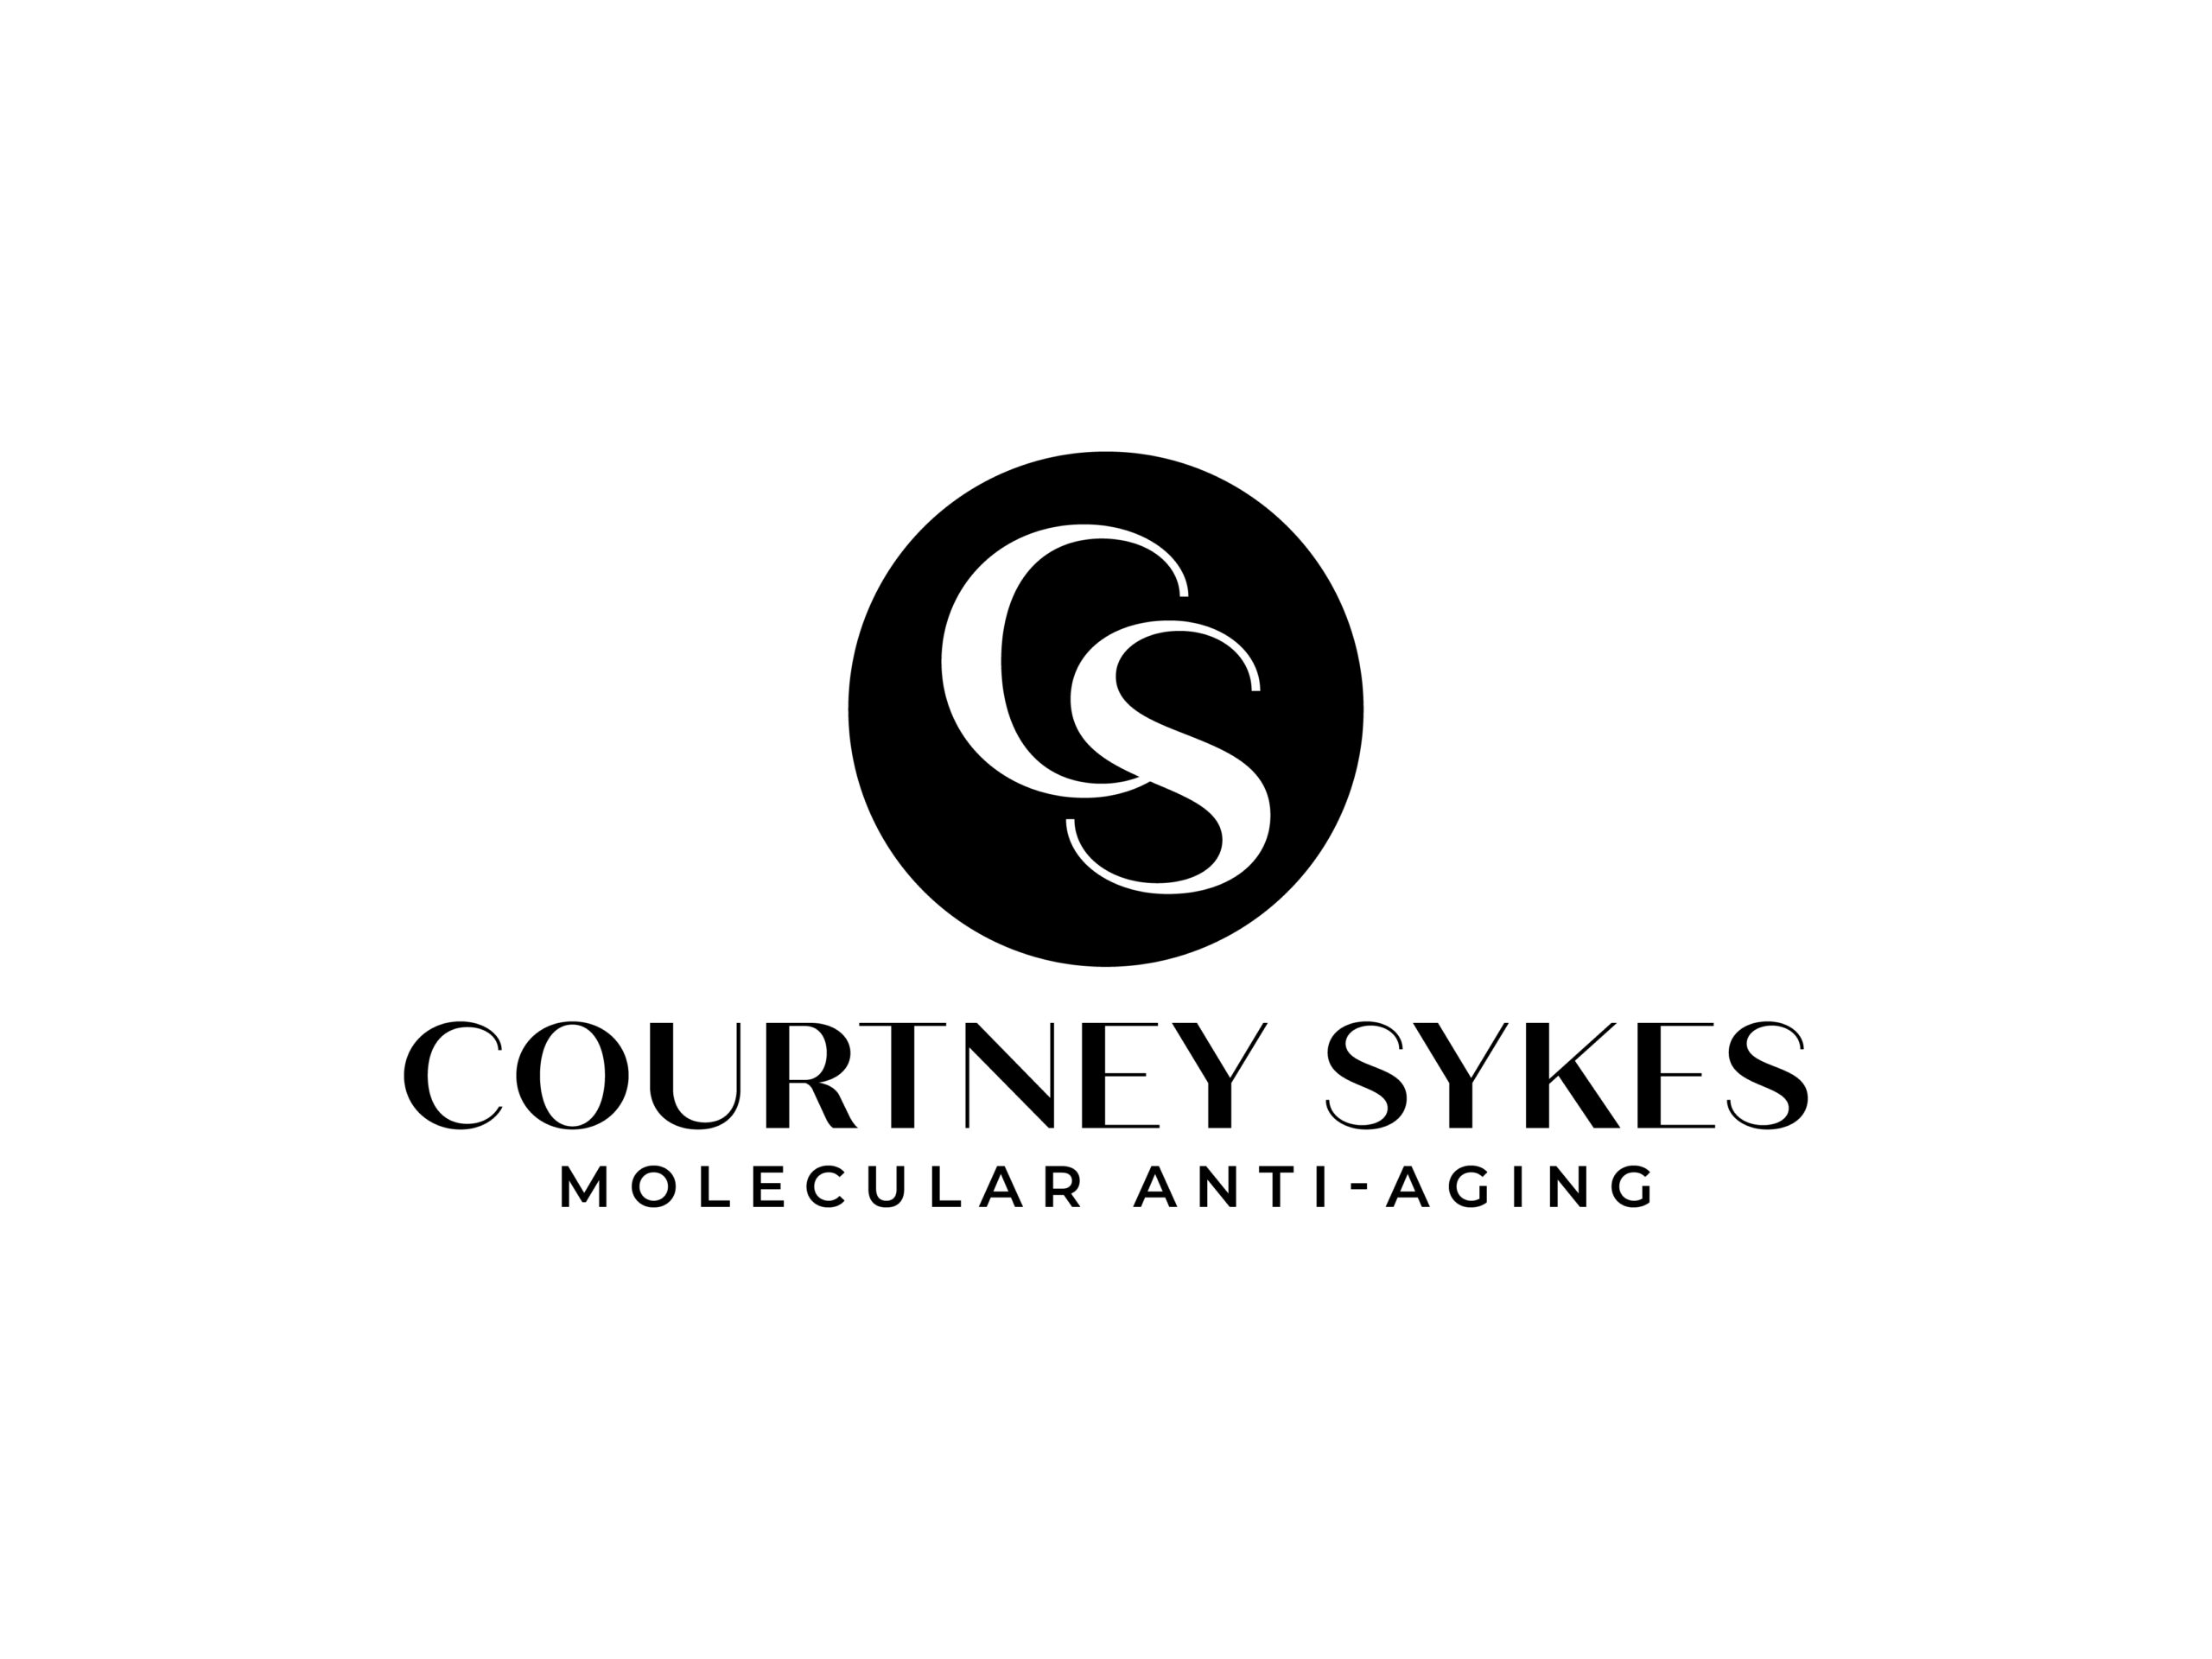 Courtney Sykes Molecular Anti-Aging